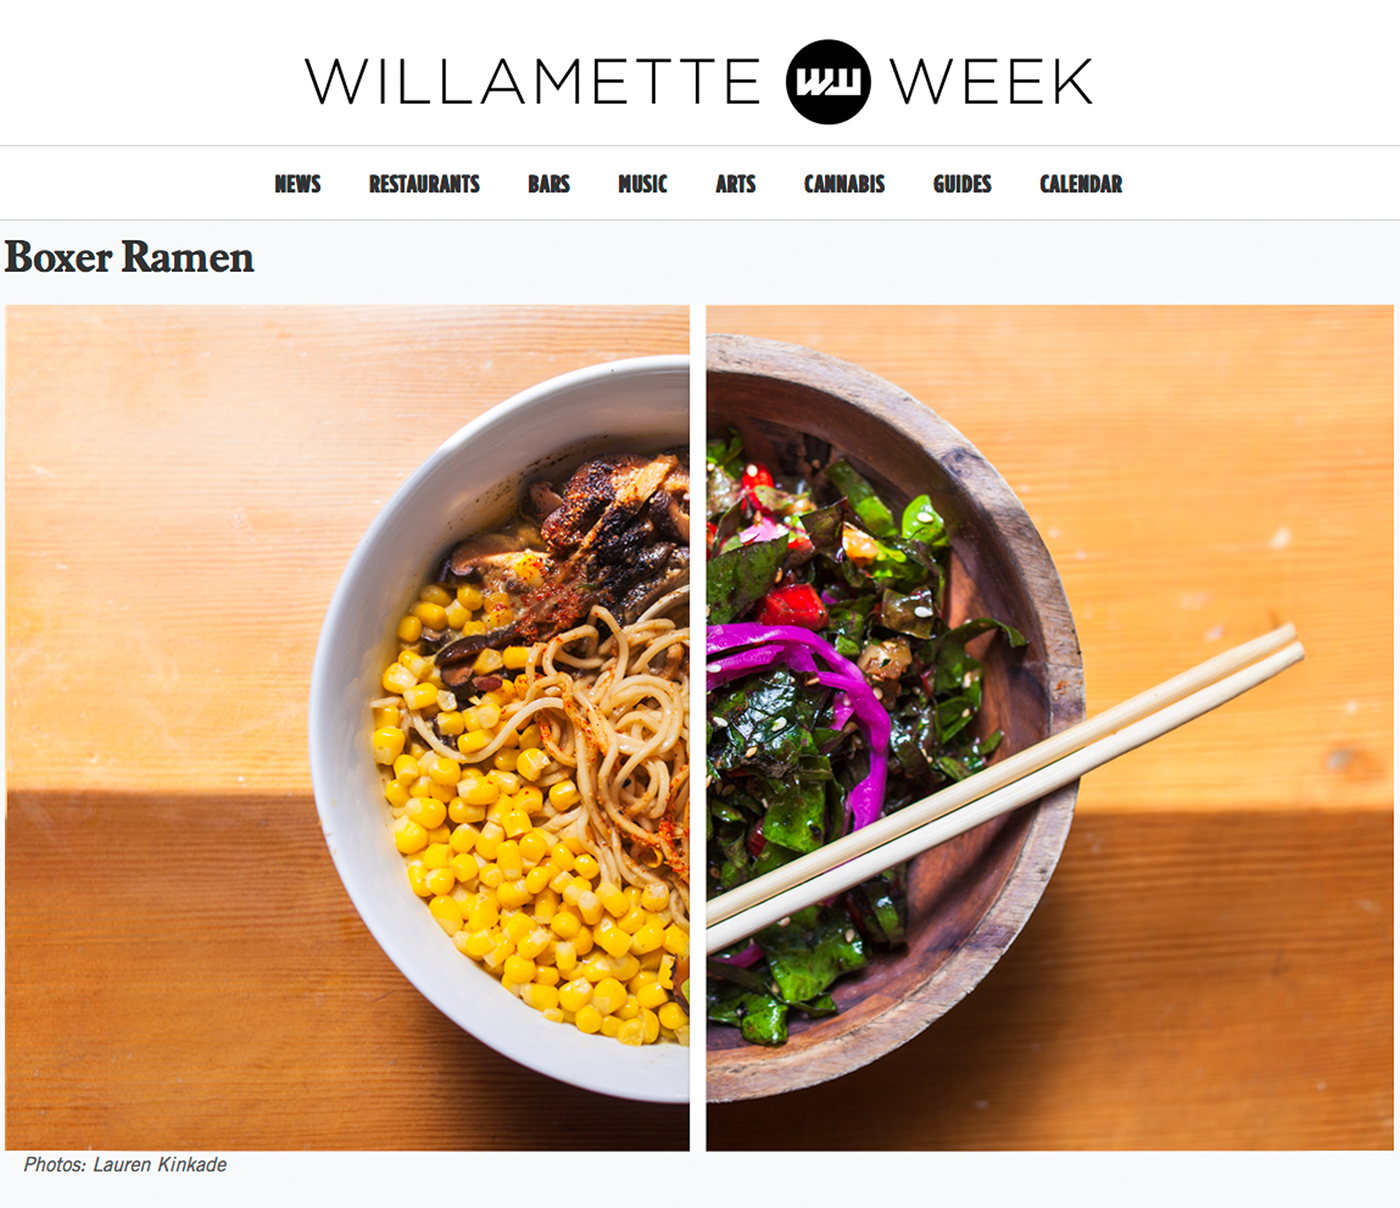 Boxer Ramen restaurant Portland pdx Oregon feature Willamette Week environment location Food  lifestyle still life dining